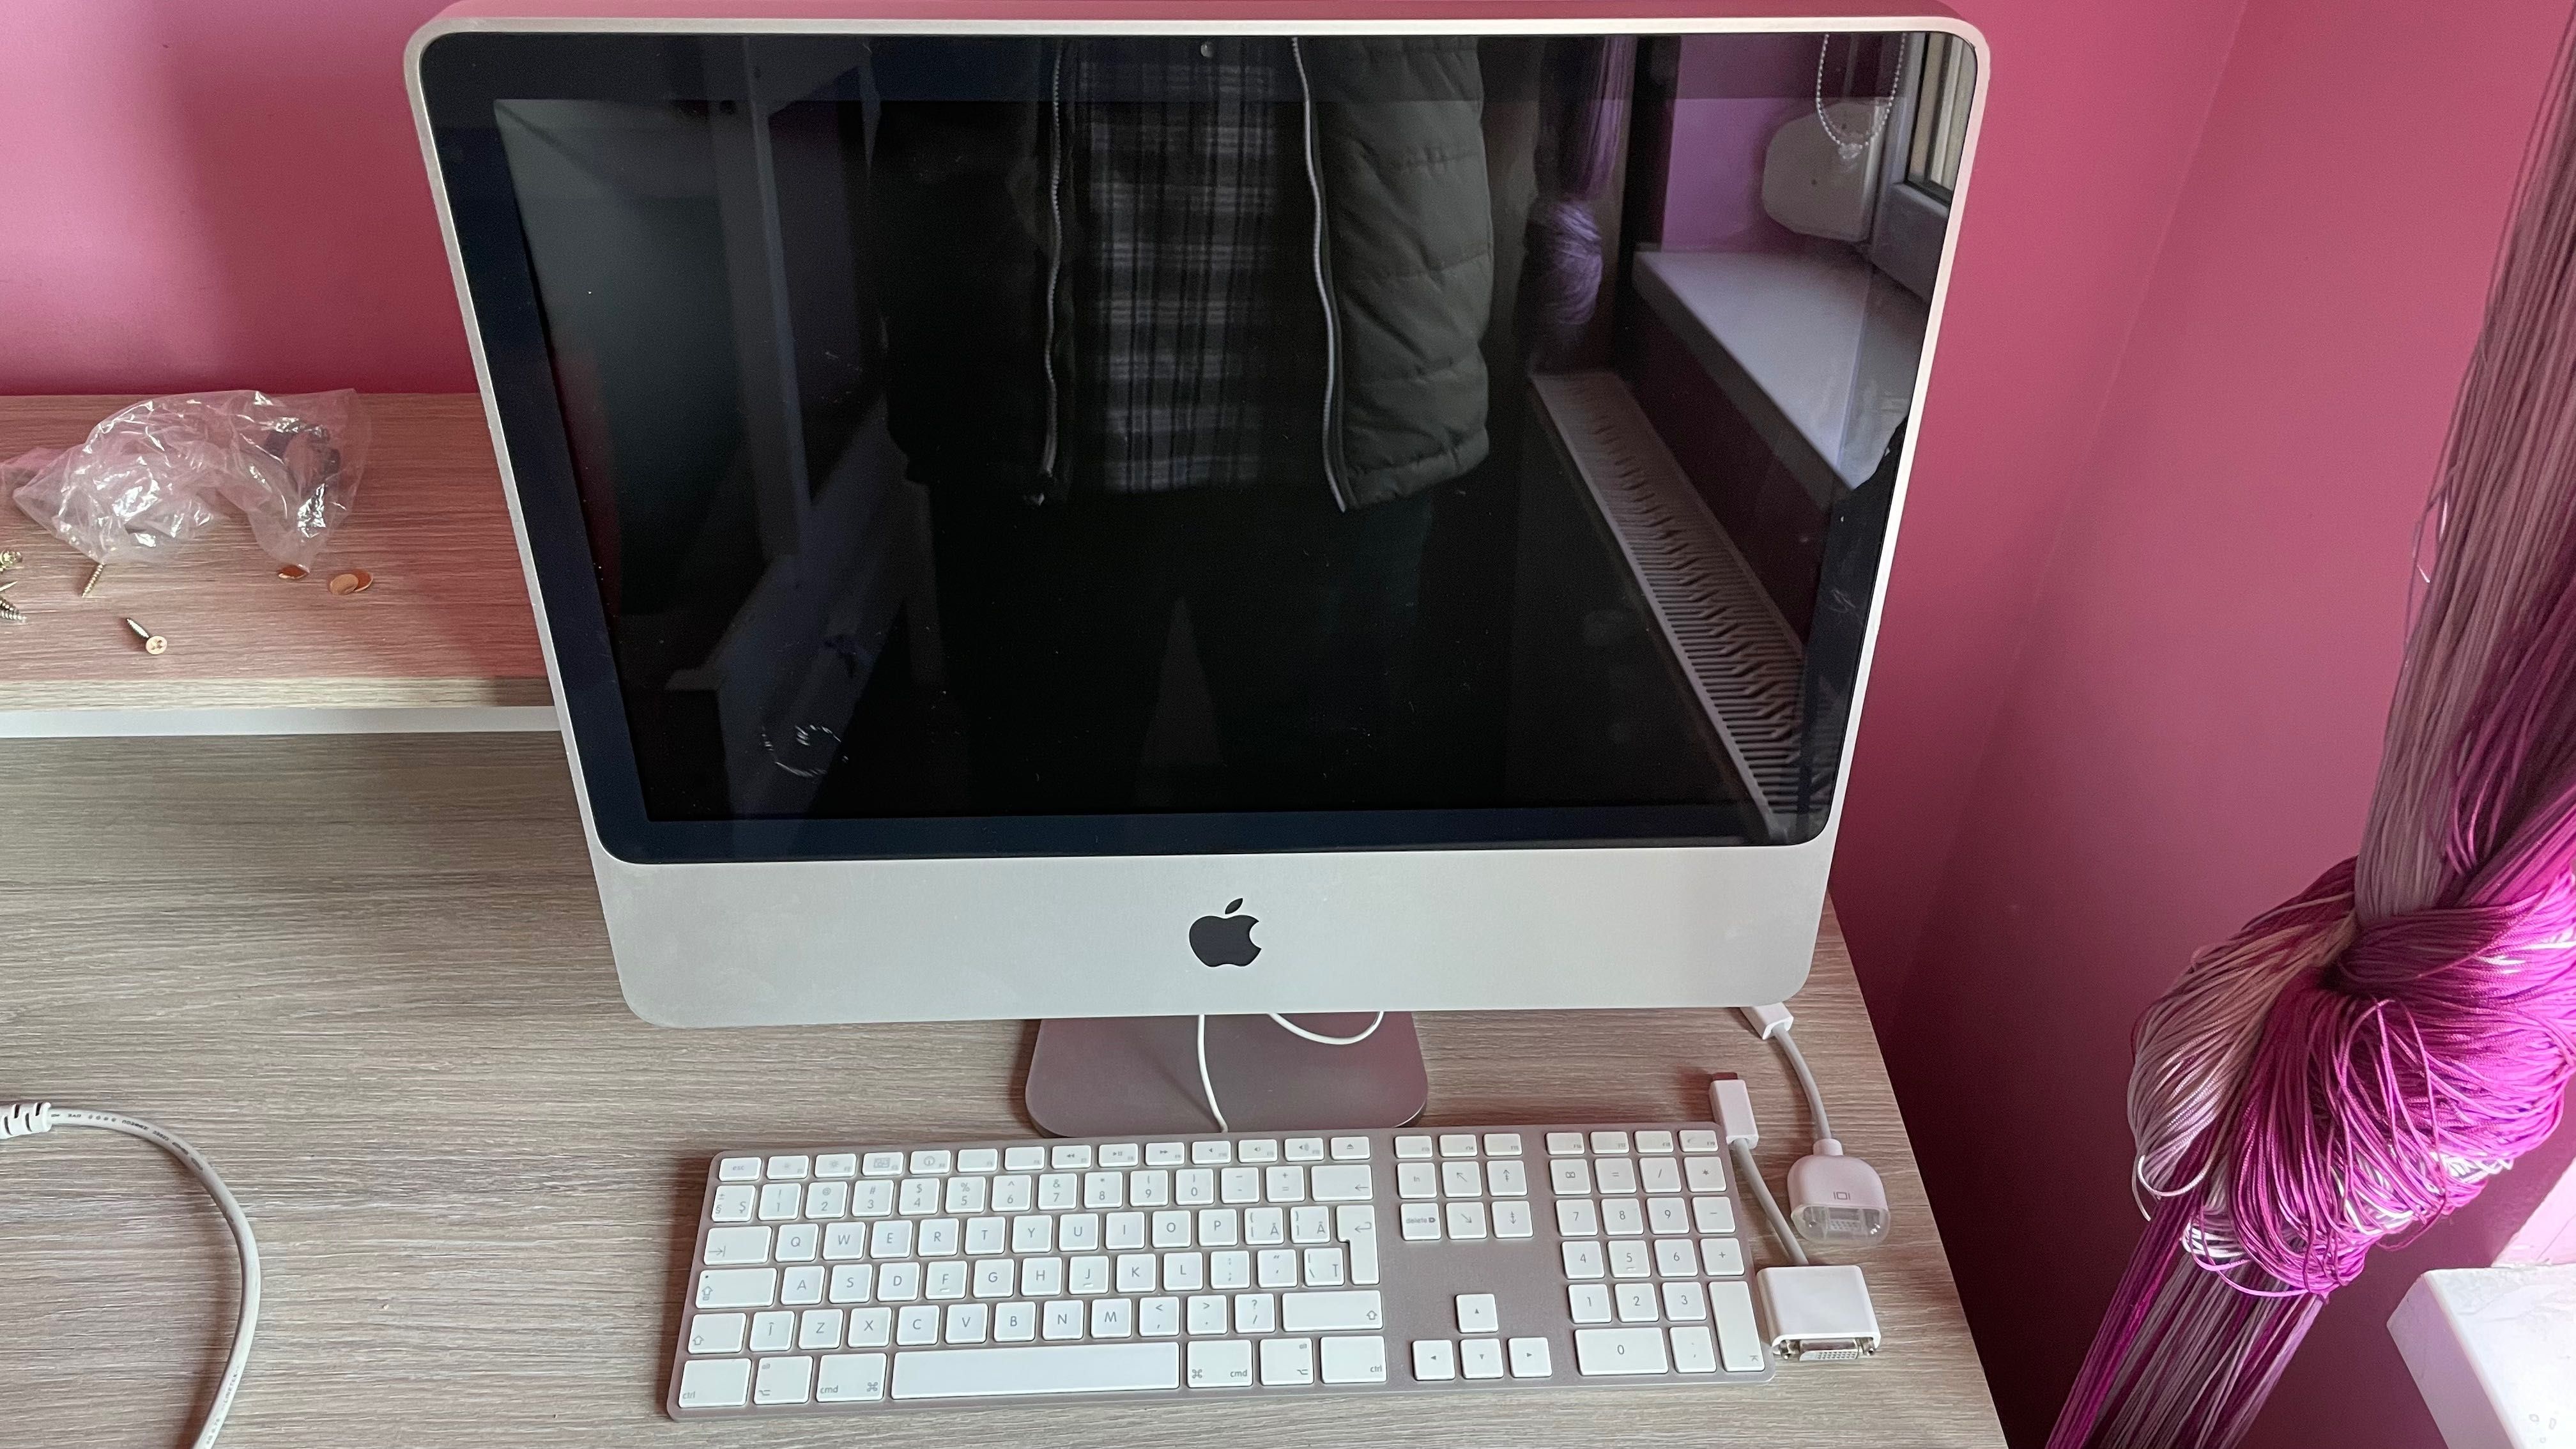 Apple iMac 20" (early 2008)